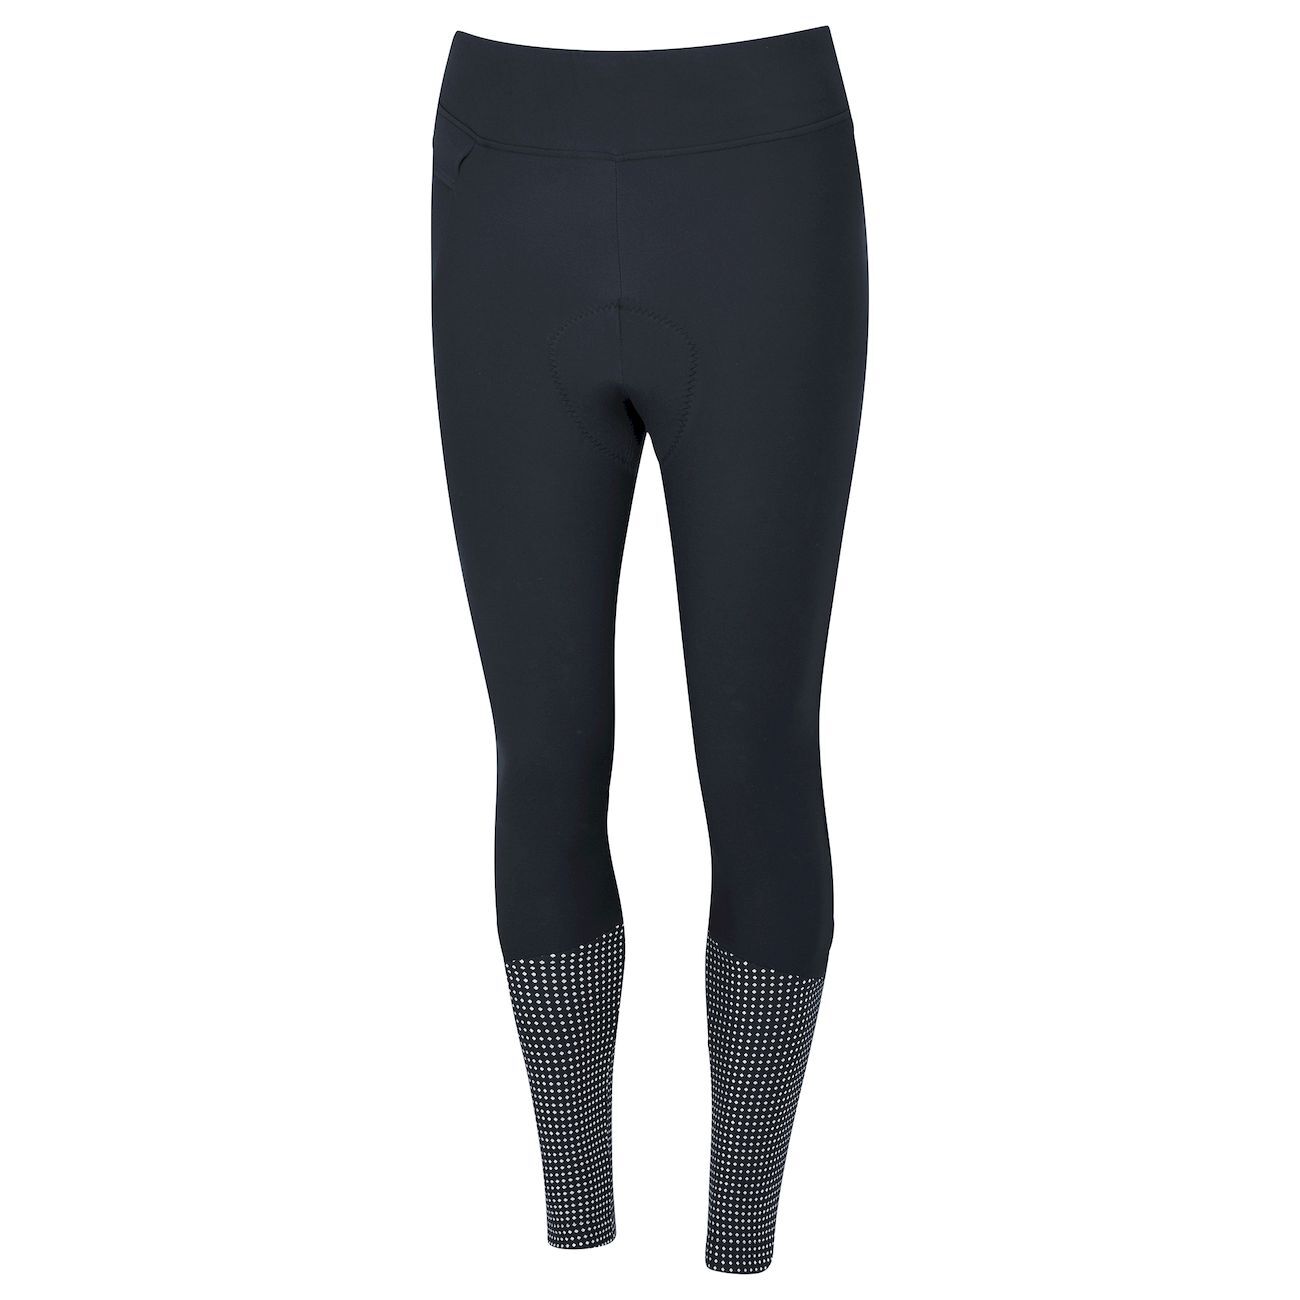 Altura Cuissard Long Sans Bretelles Dwr Nightvision - Cycling shorts - Women's